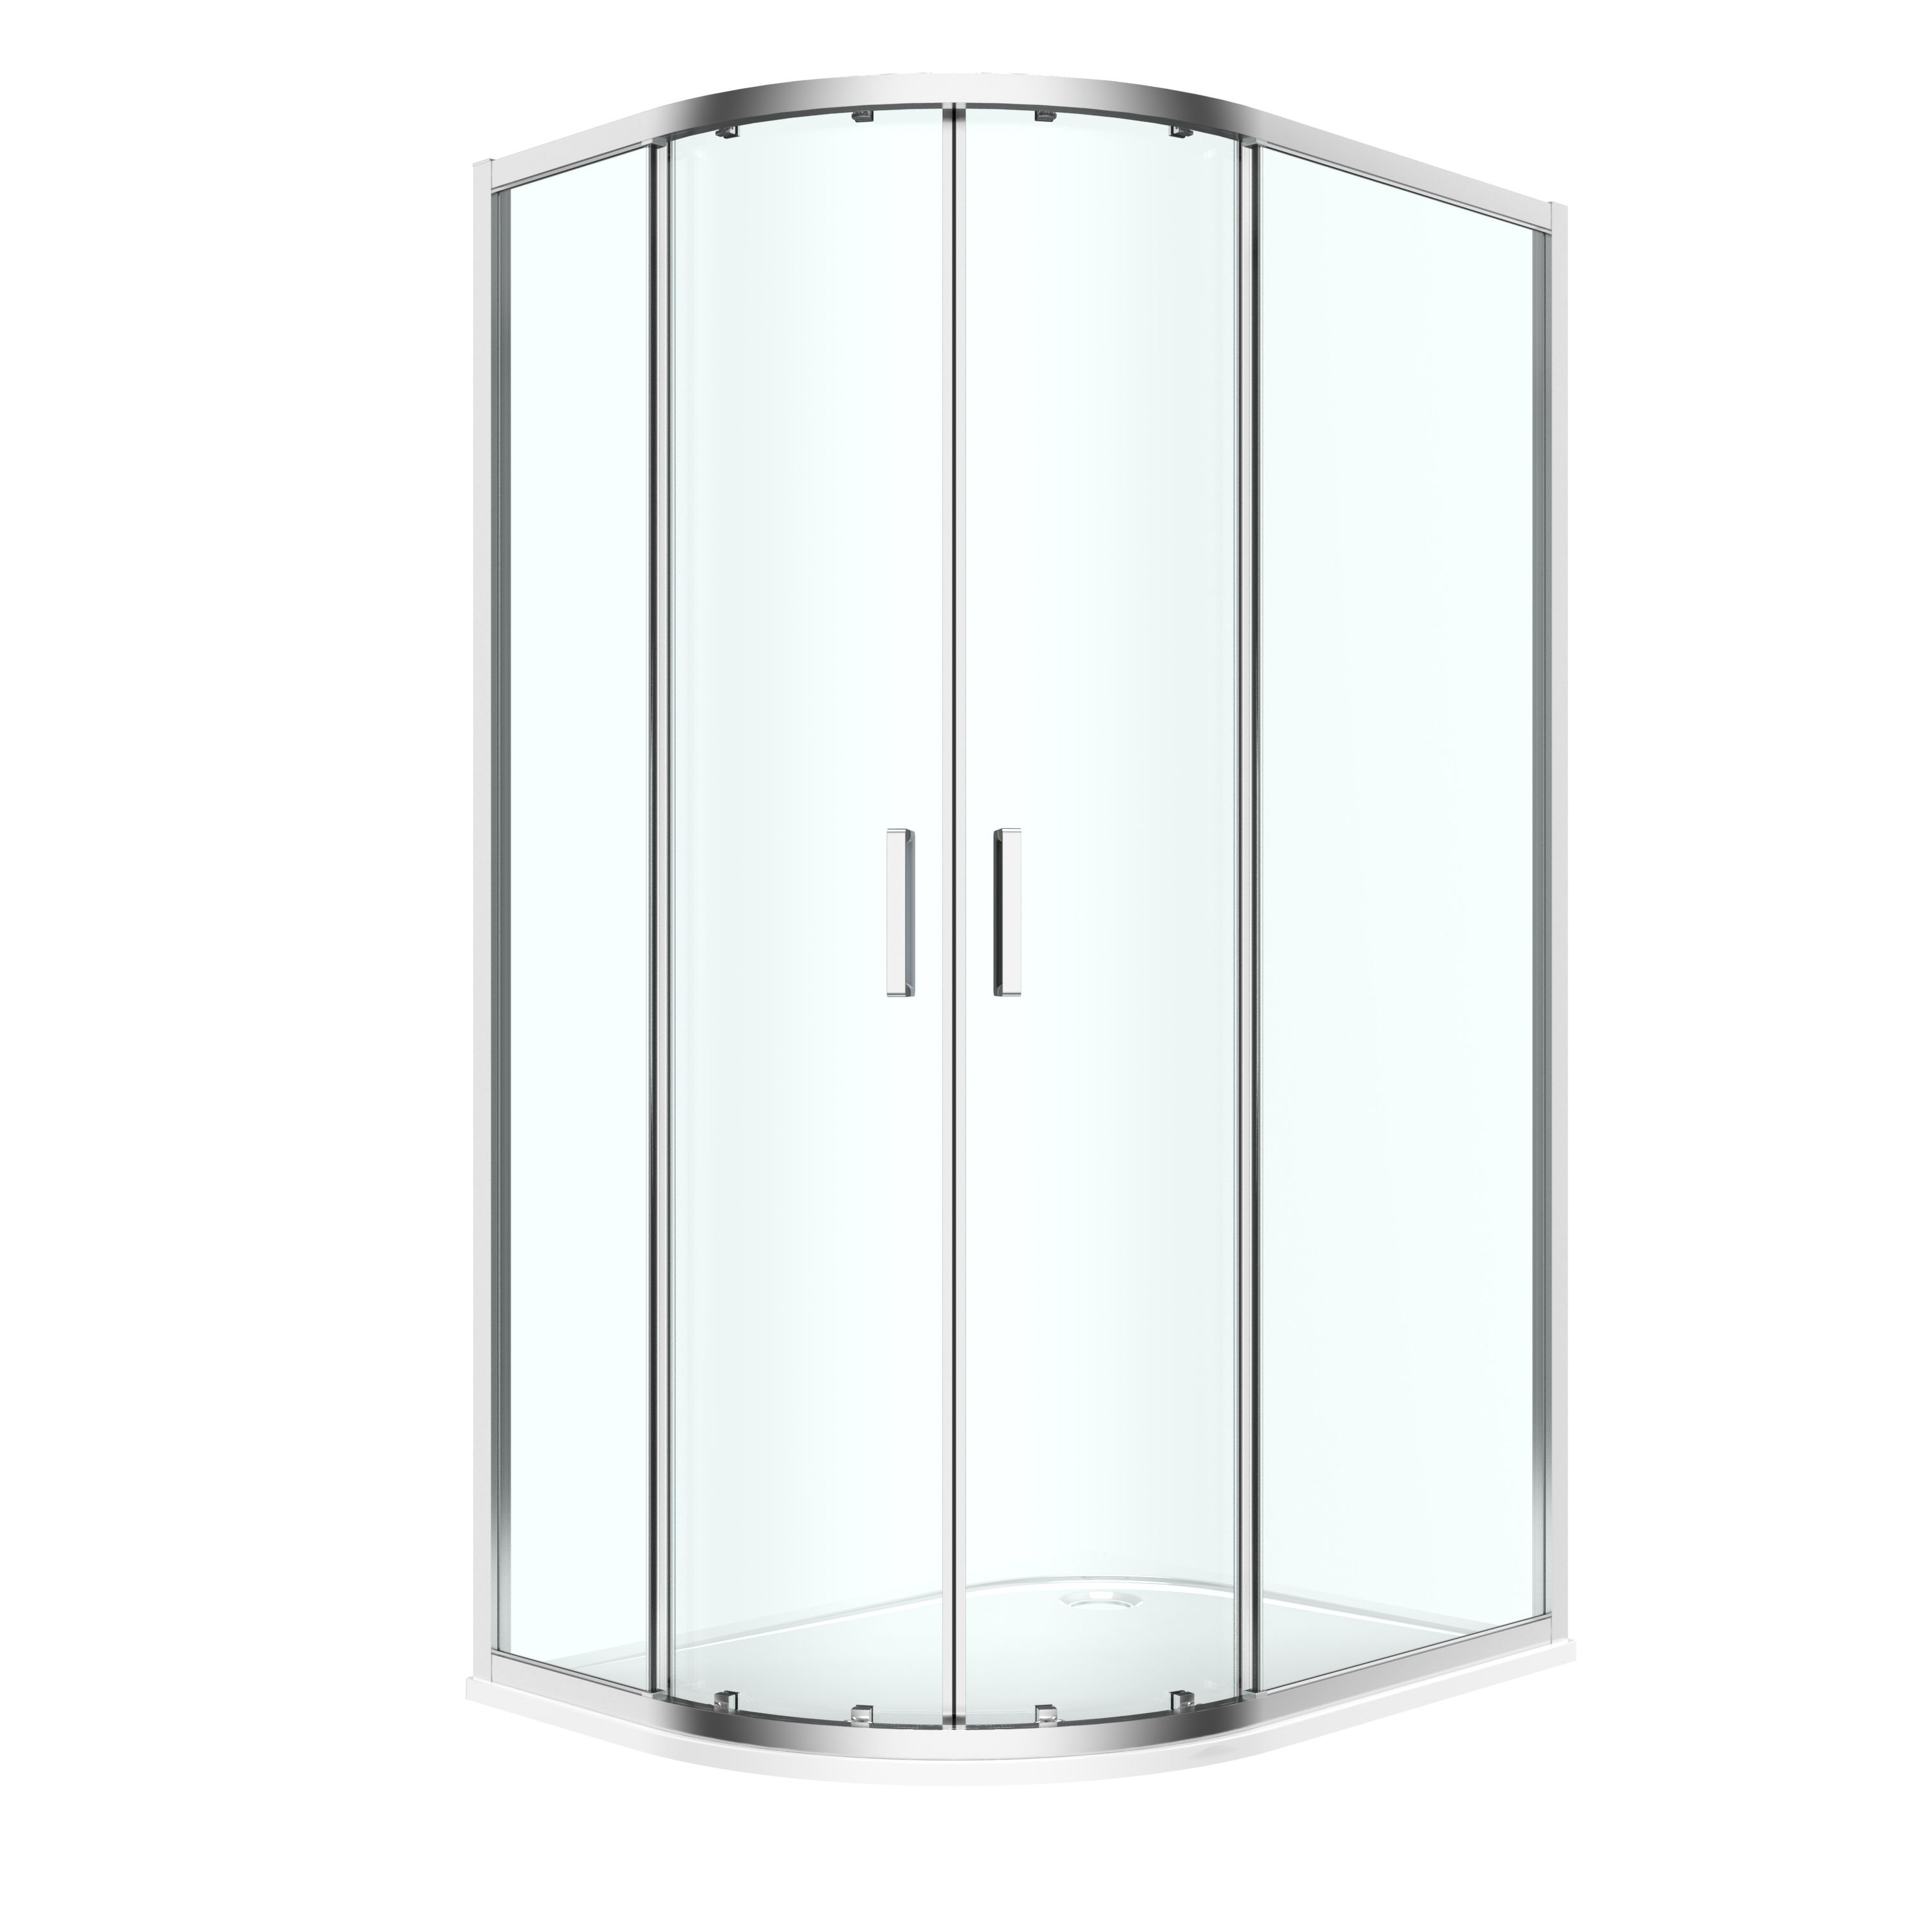 GoodHome Ledava Chrome effect Right-handed Offset quadrant Shower Enclosure & tray - Corner entry double sliding door (H)195cm (W)90cm (D)120cm